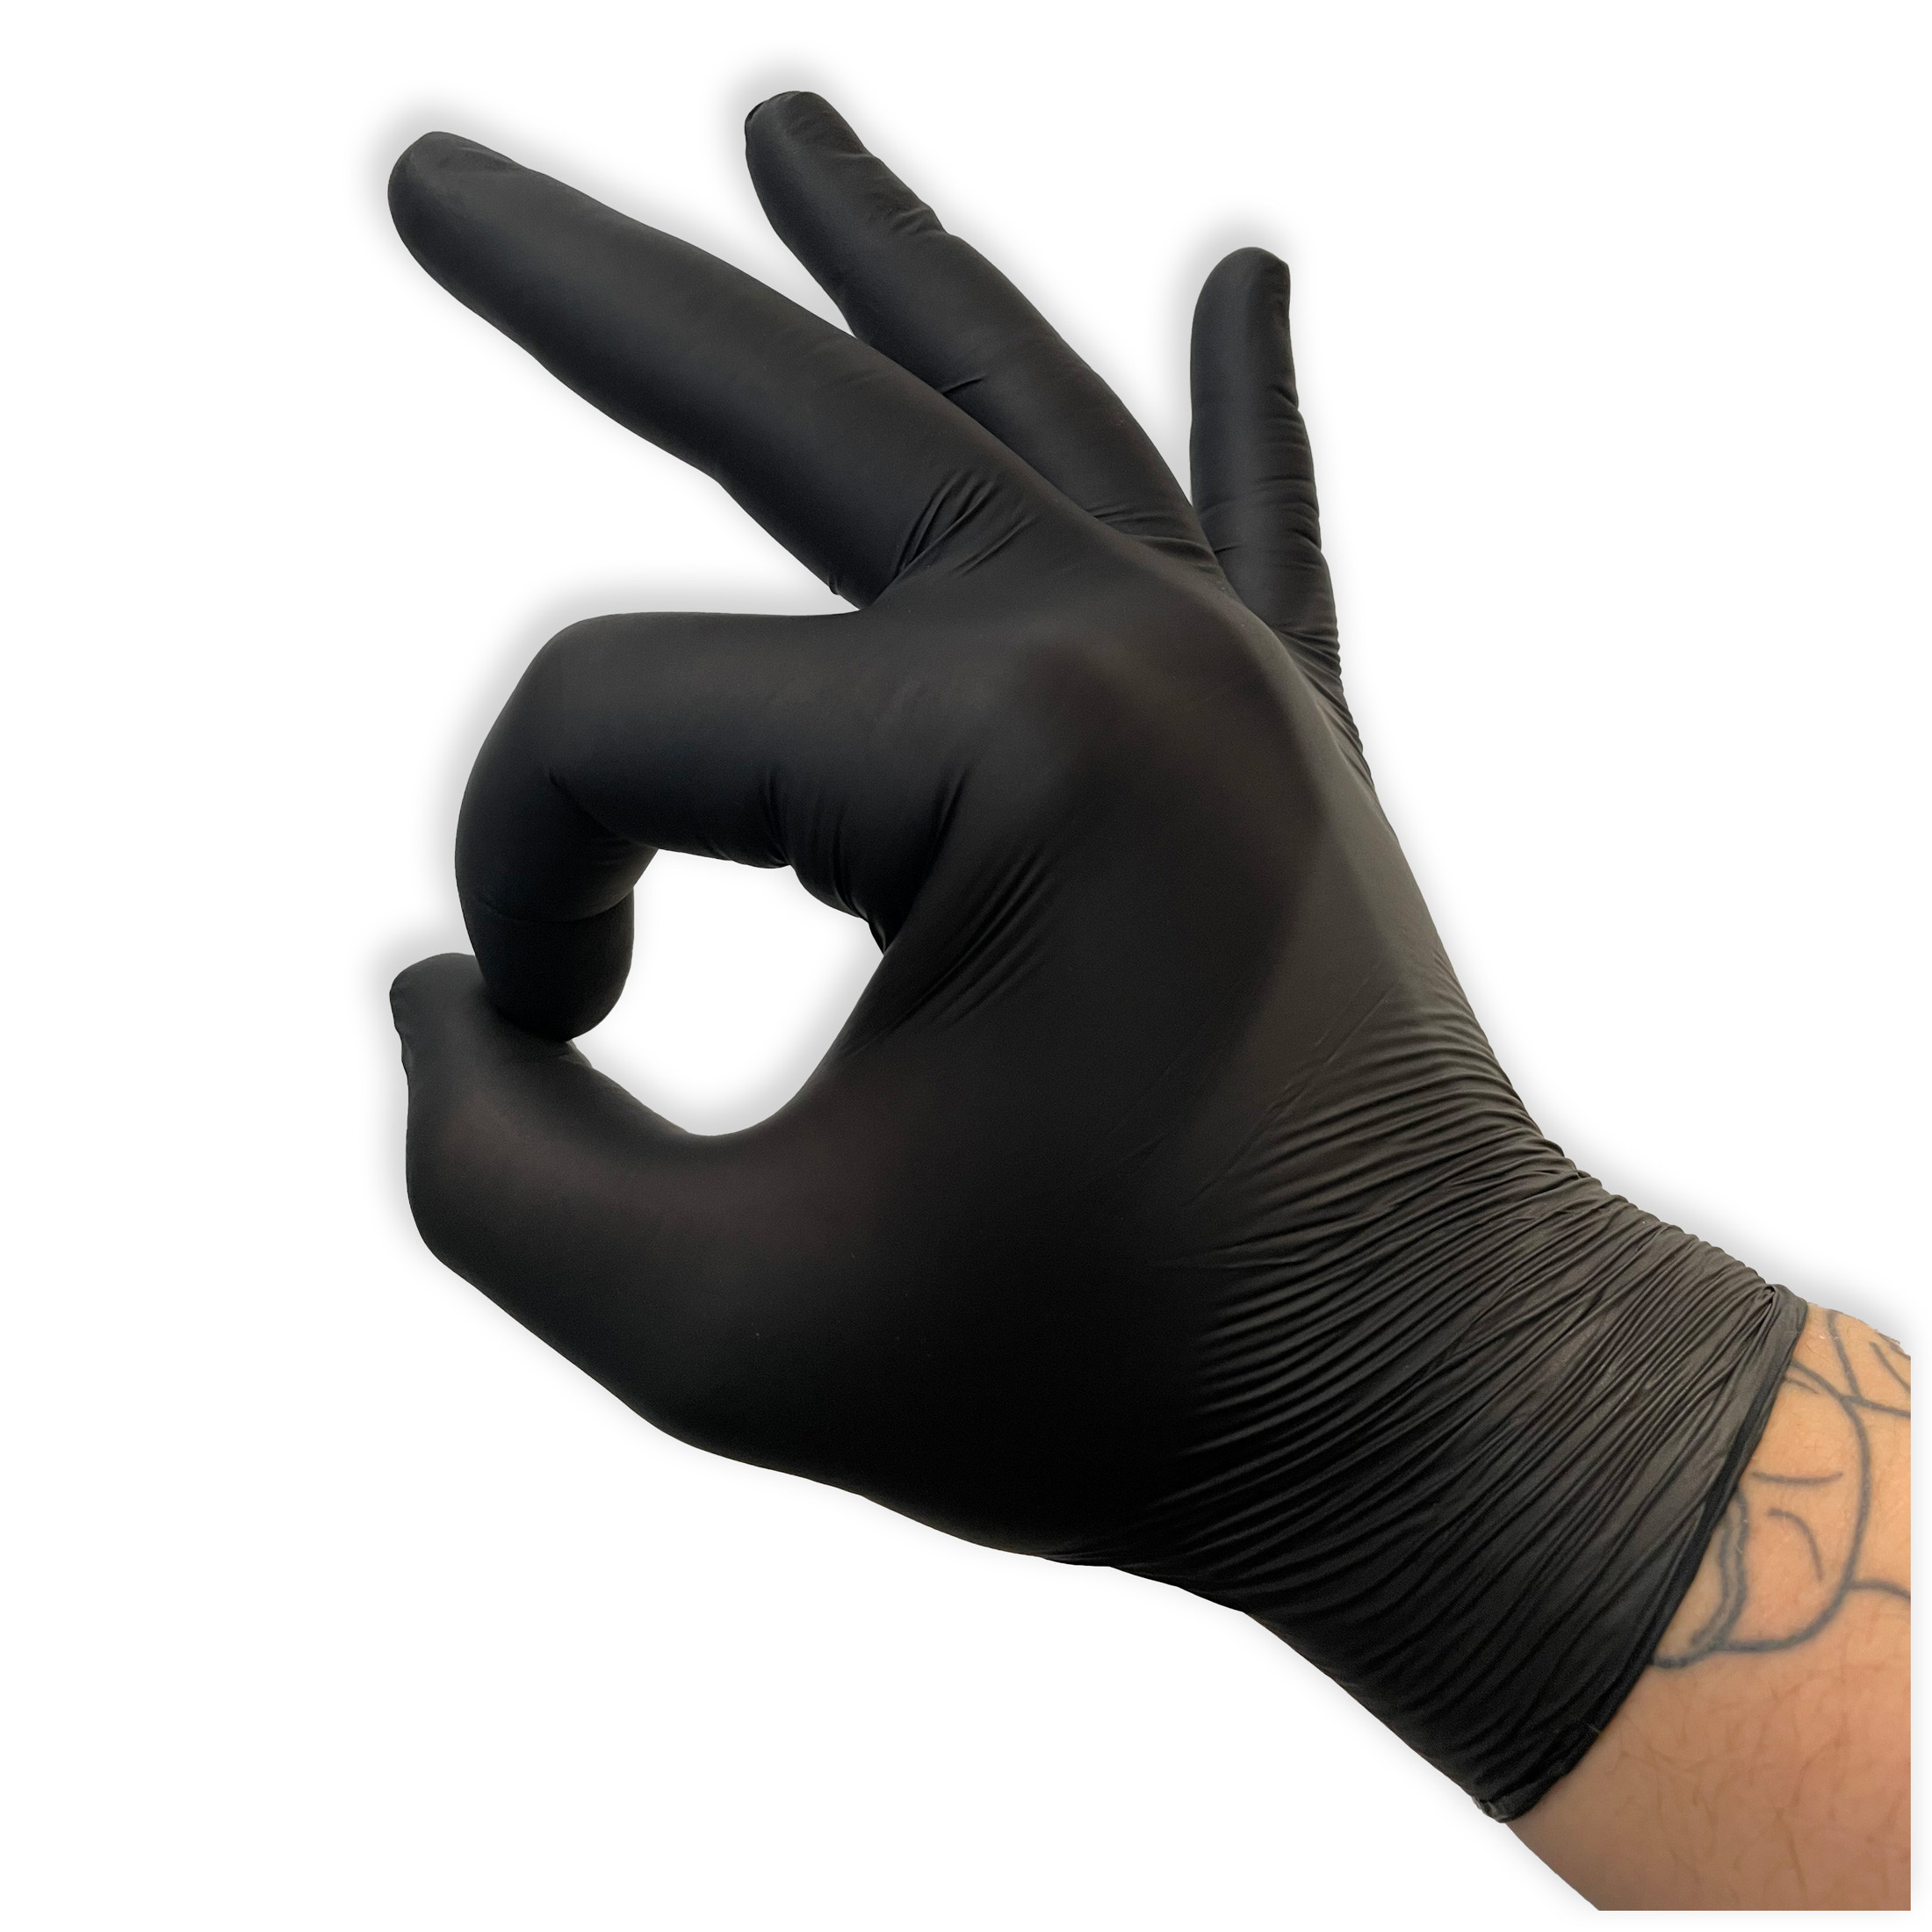 Rękawiczki nitrylowe czarne rozmiar xl (9-10) 100 sztuk medasept